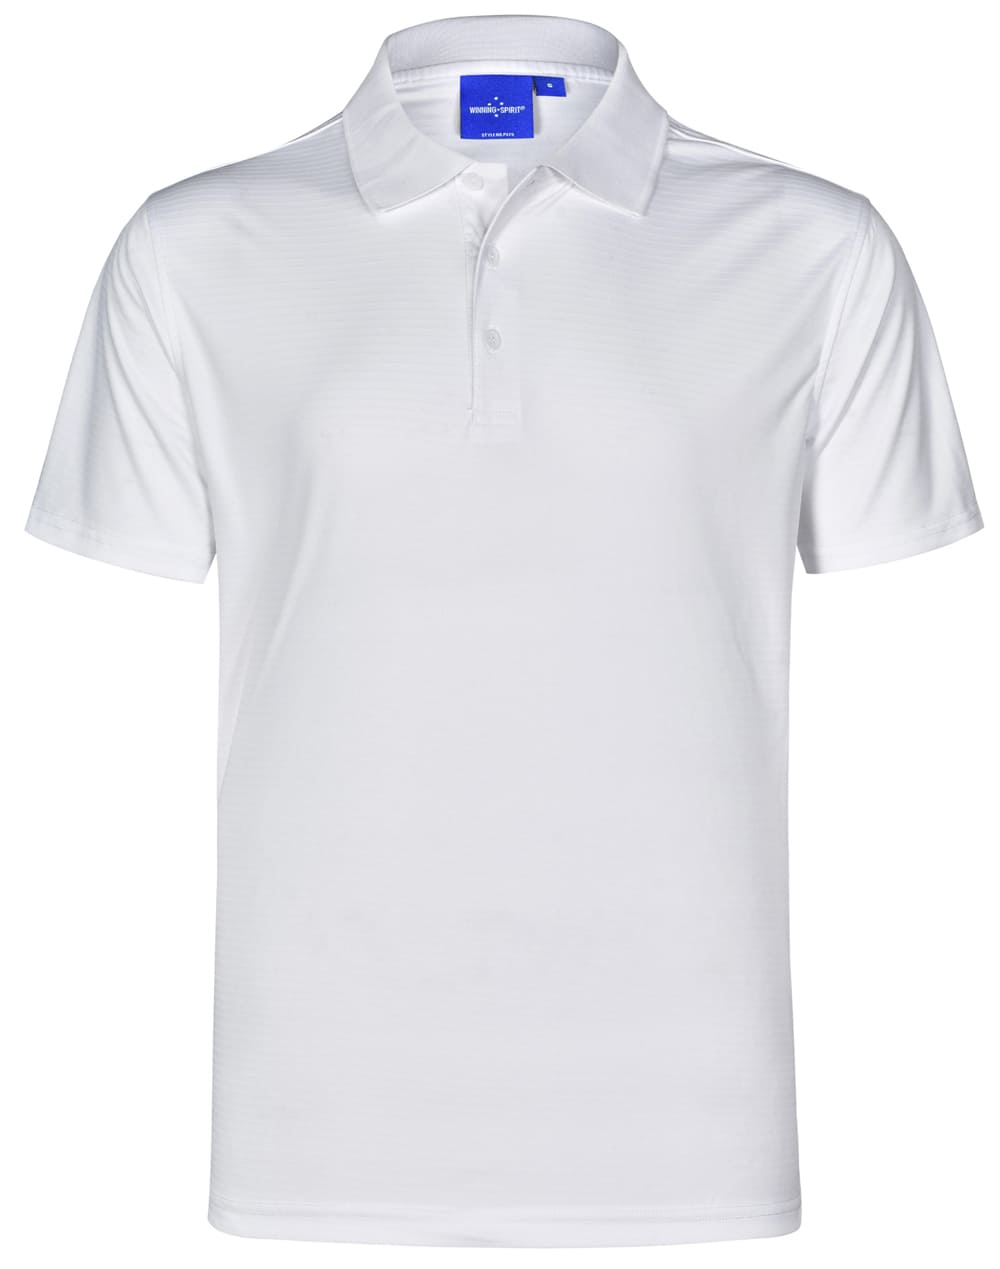 Custom Made (Navy) Mens Polo Shirts Polyester Perth Australia